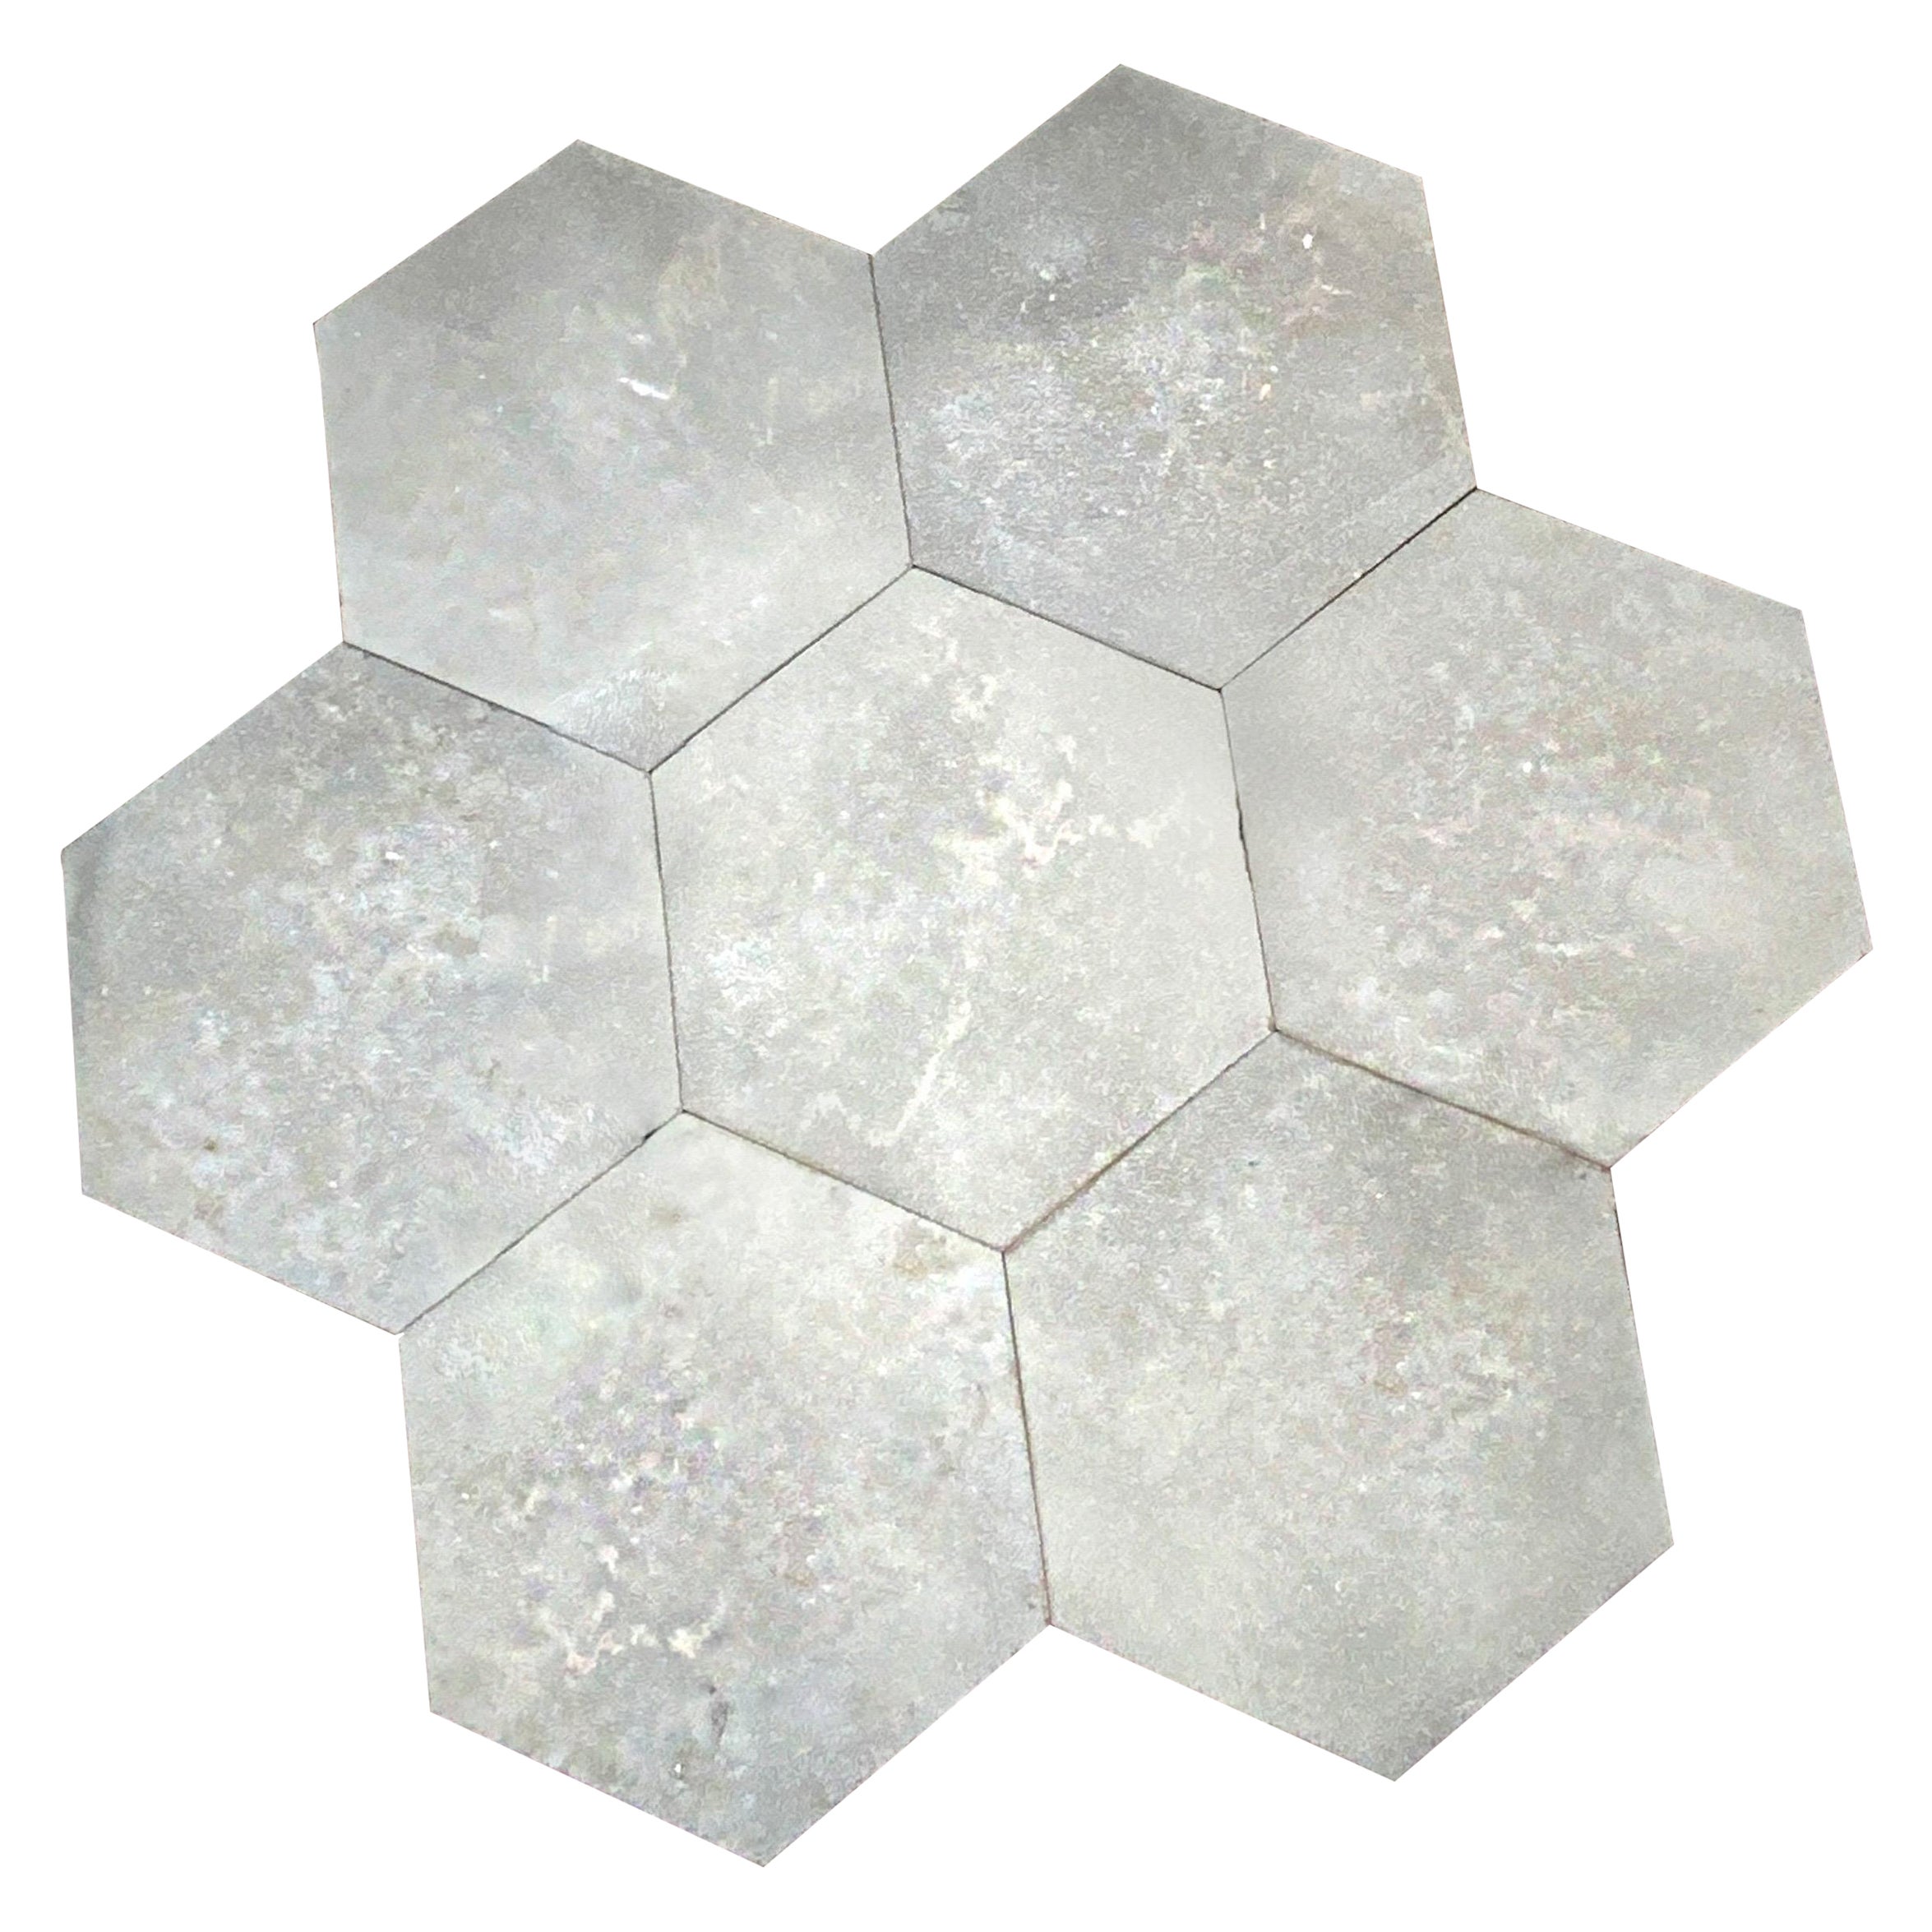 Charcoal Hexagon Tiles For Sale